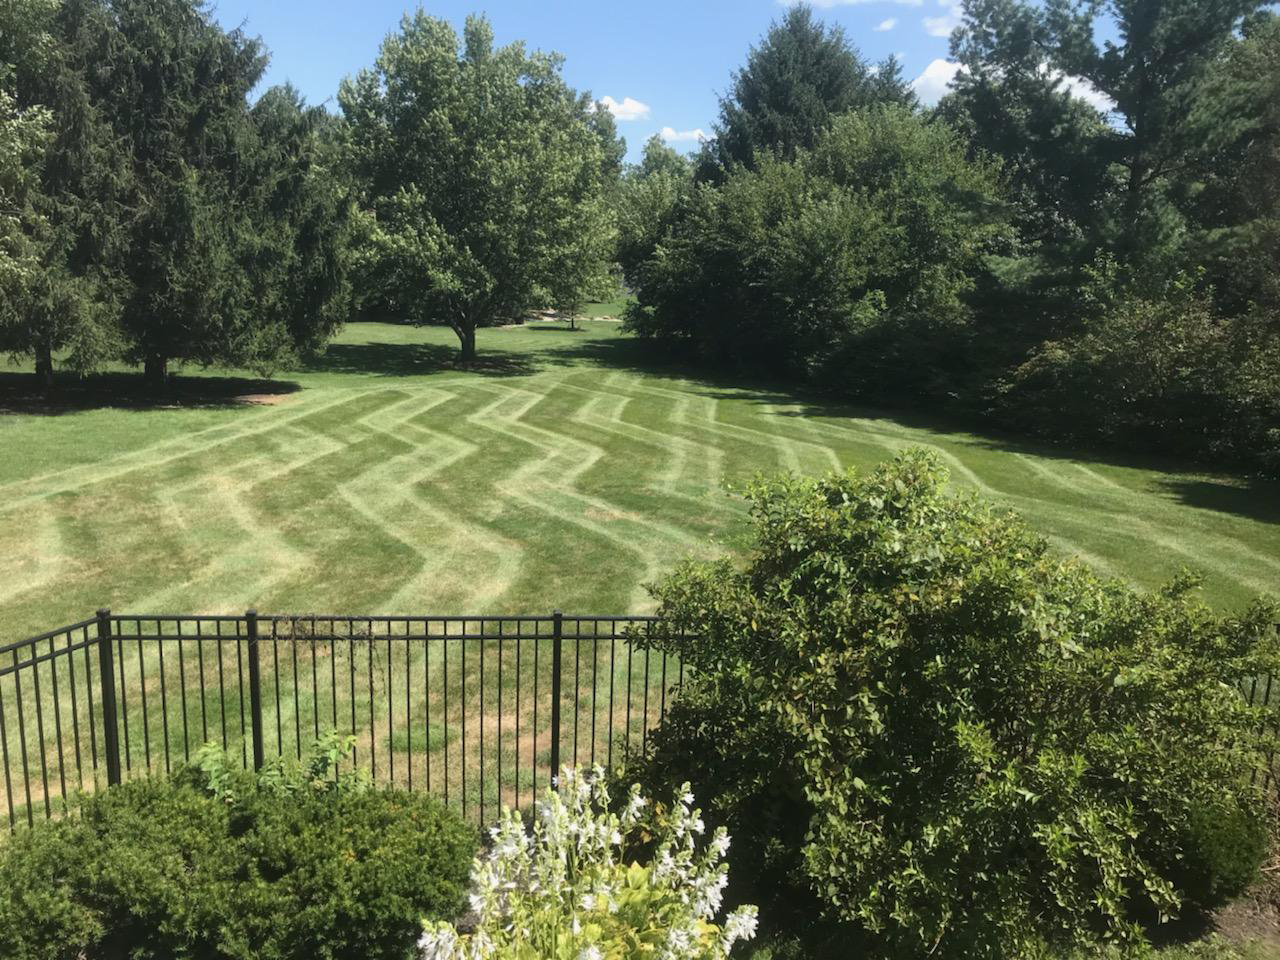 lawn mowing stripes